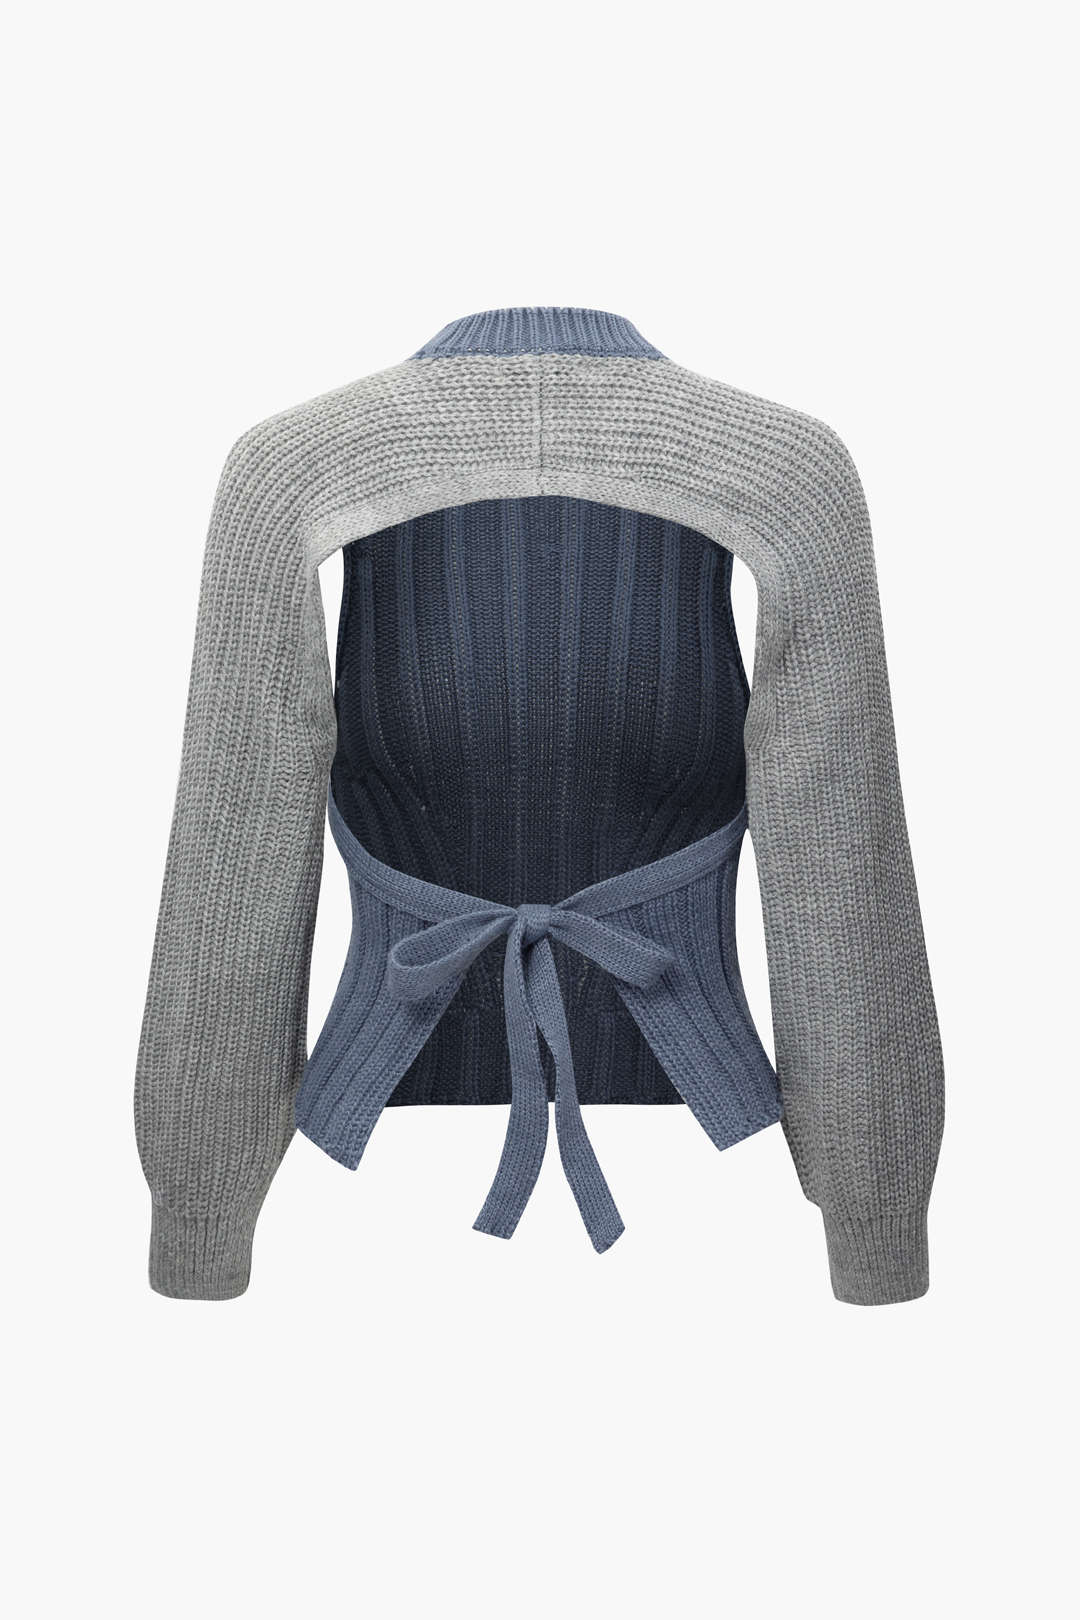 Colorblock Turtleneck Backless Tie Back Sweater